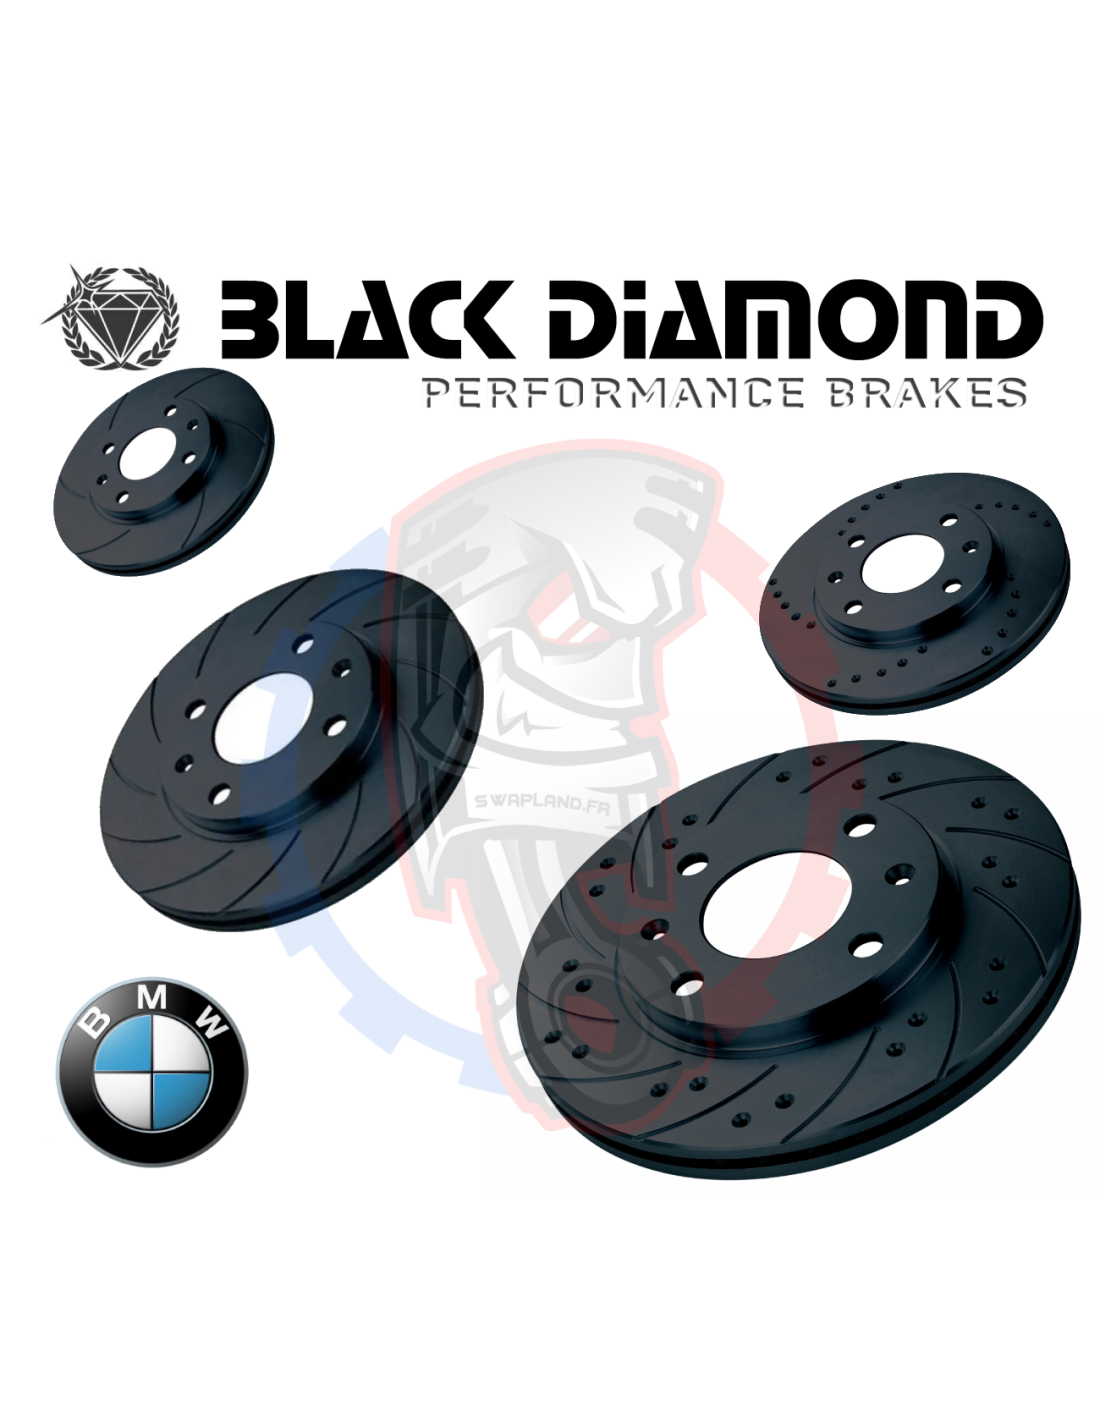 Disques de frein Black diamond pour BMW Série 5 -SWAPLAND-